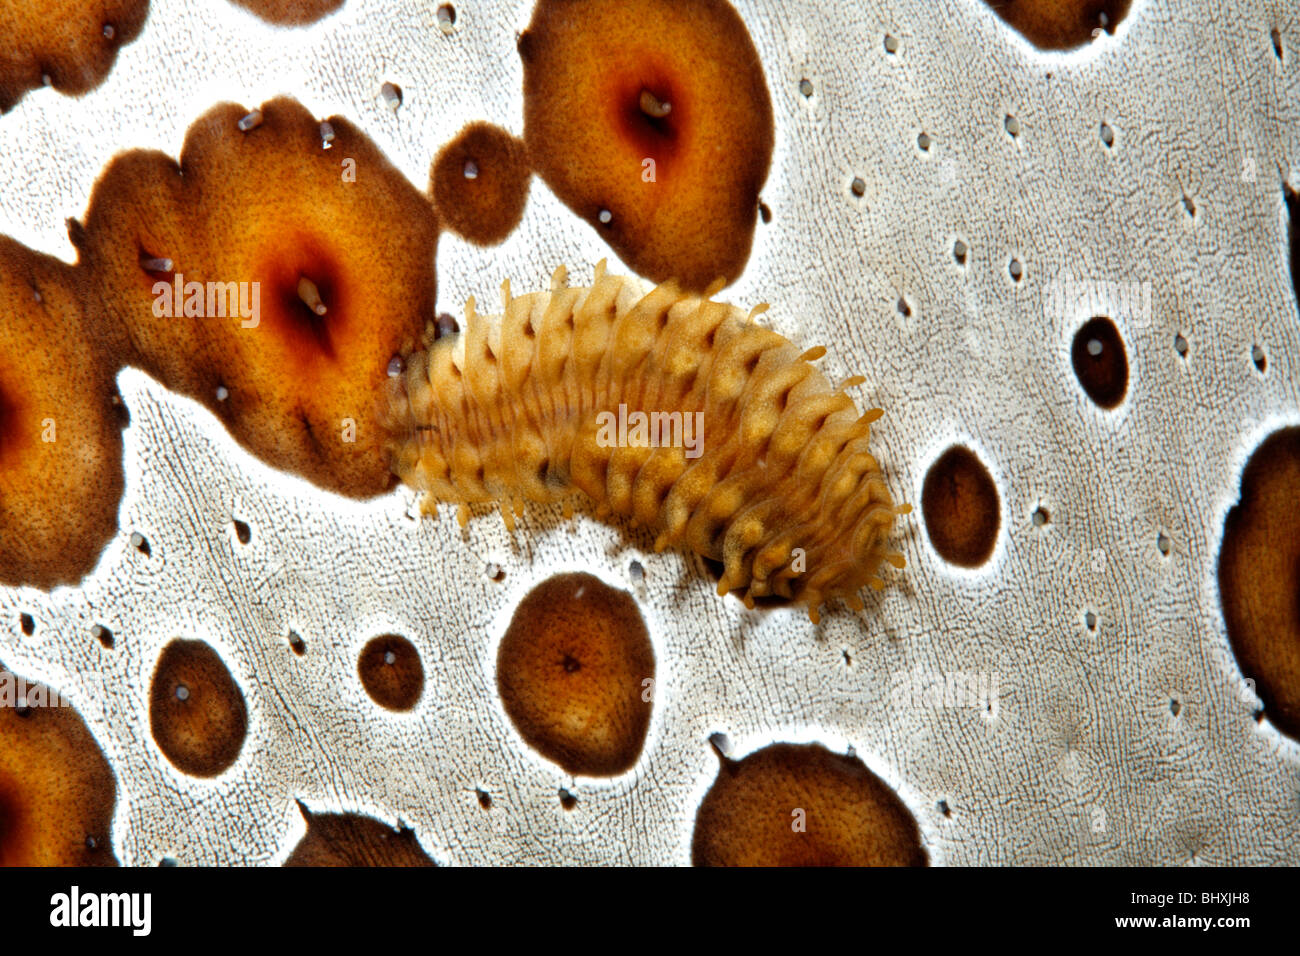 Sea Cucumber Scale Worm, Gastrolepidia clavigera, crawling on its host holothurian, Bohadschia argus. Stock Photo